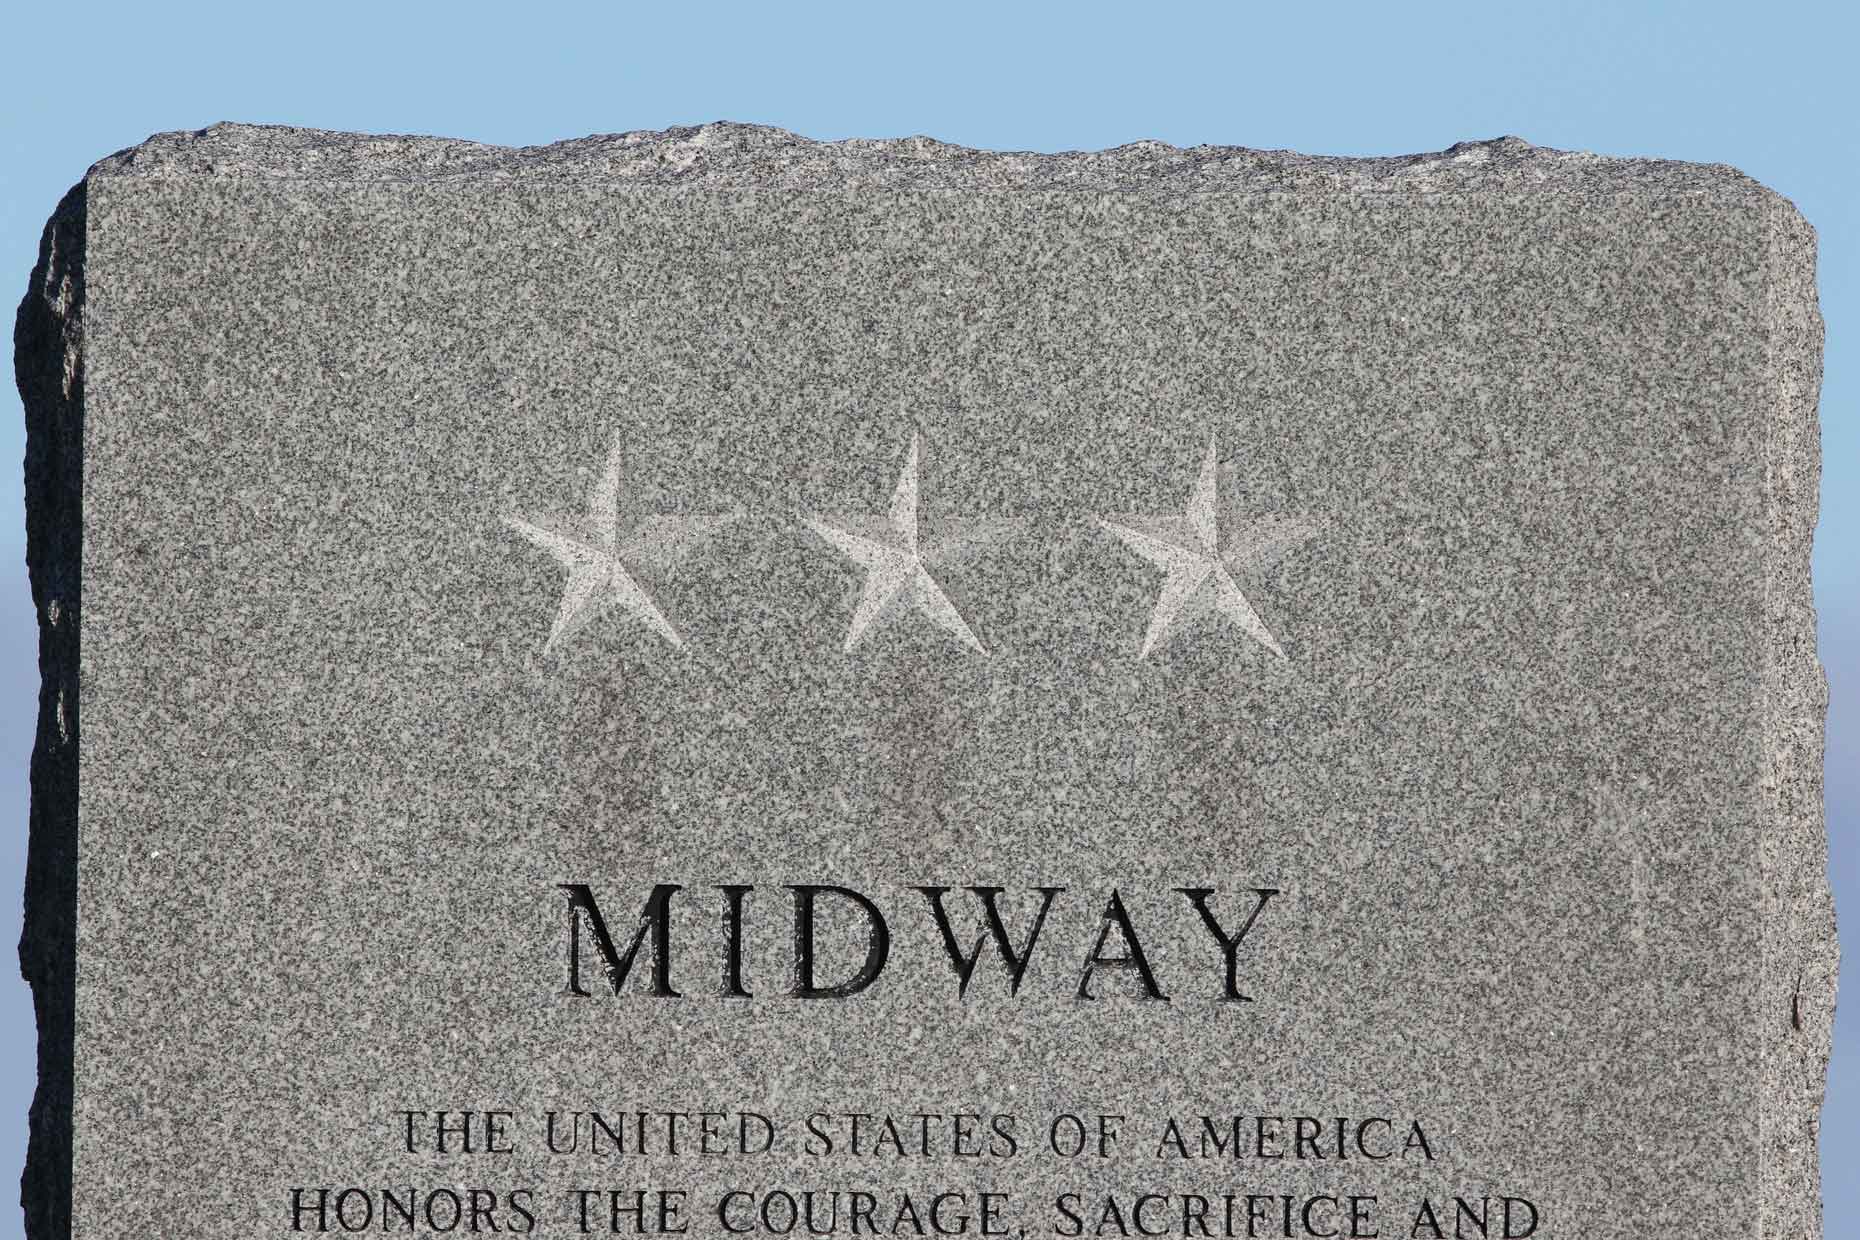 Battle of Midway Memorial Marker